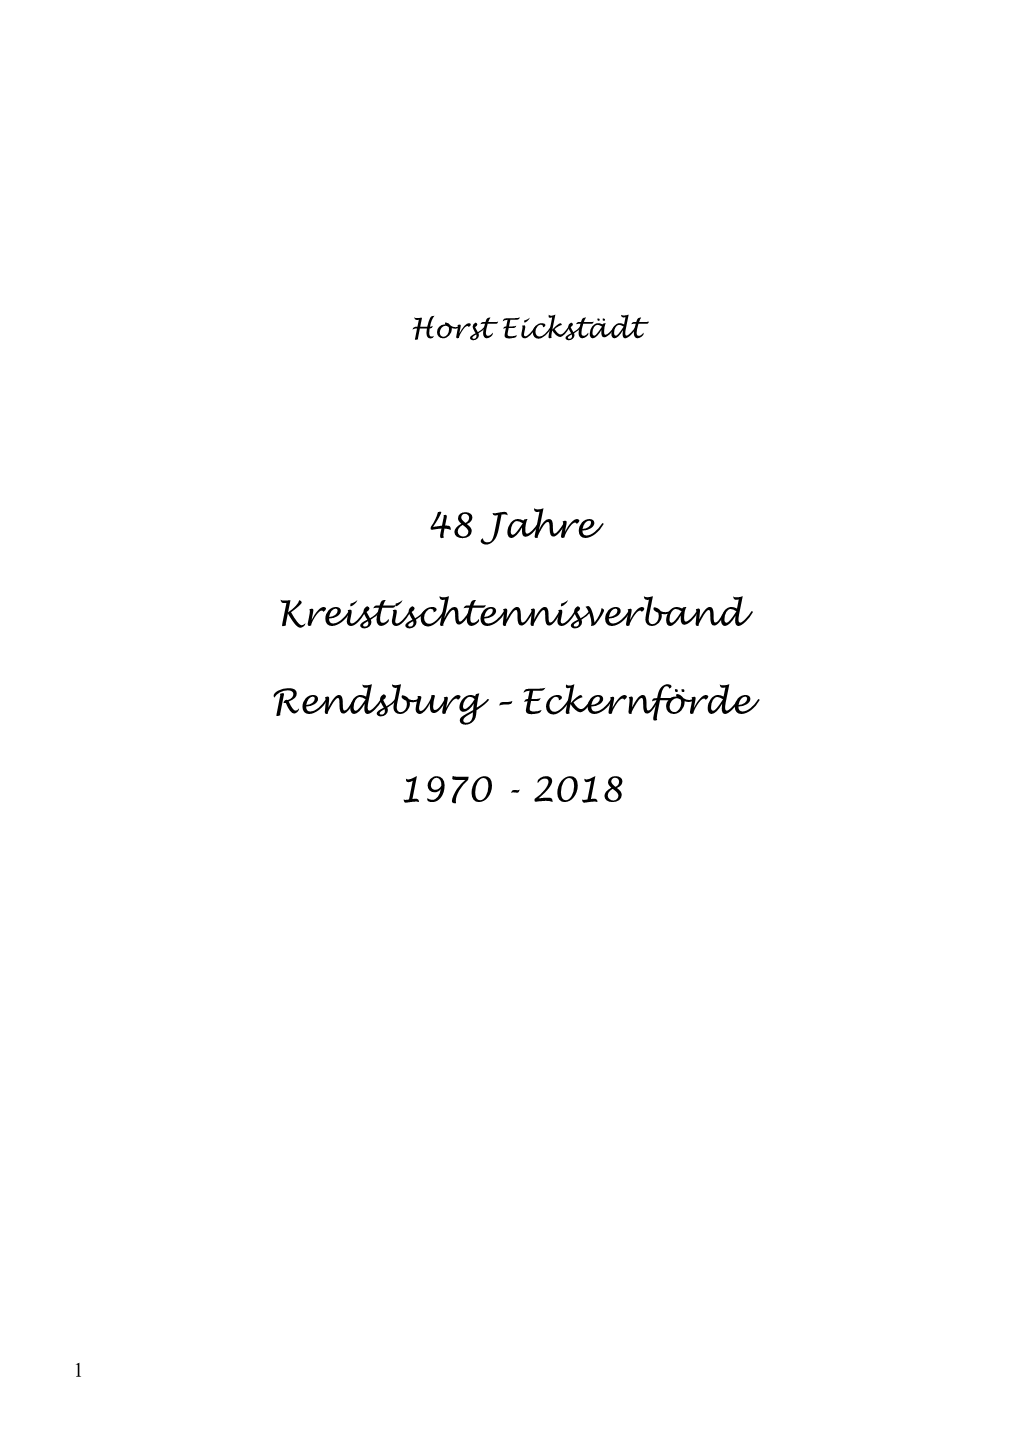 Eckernförde 1970 - 1996 Sportwart 1996 - 2004 1